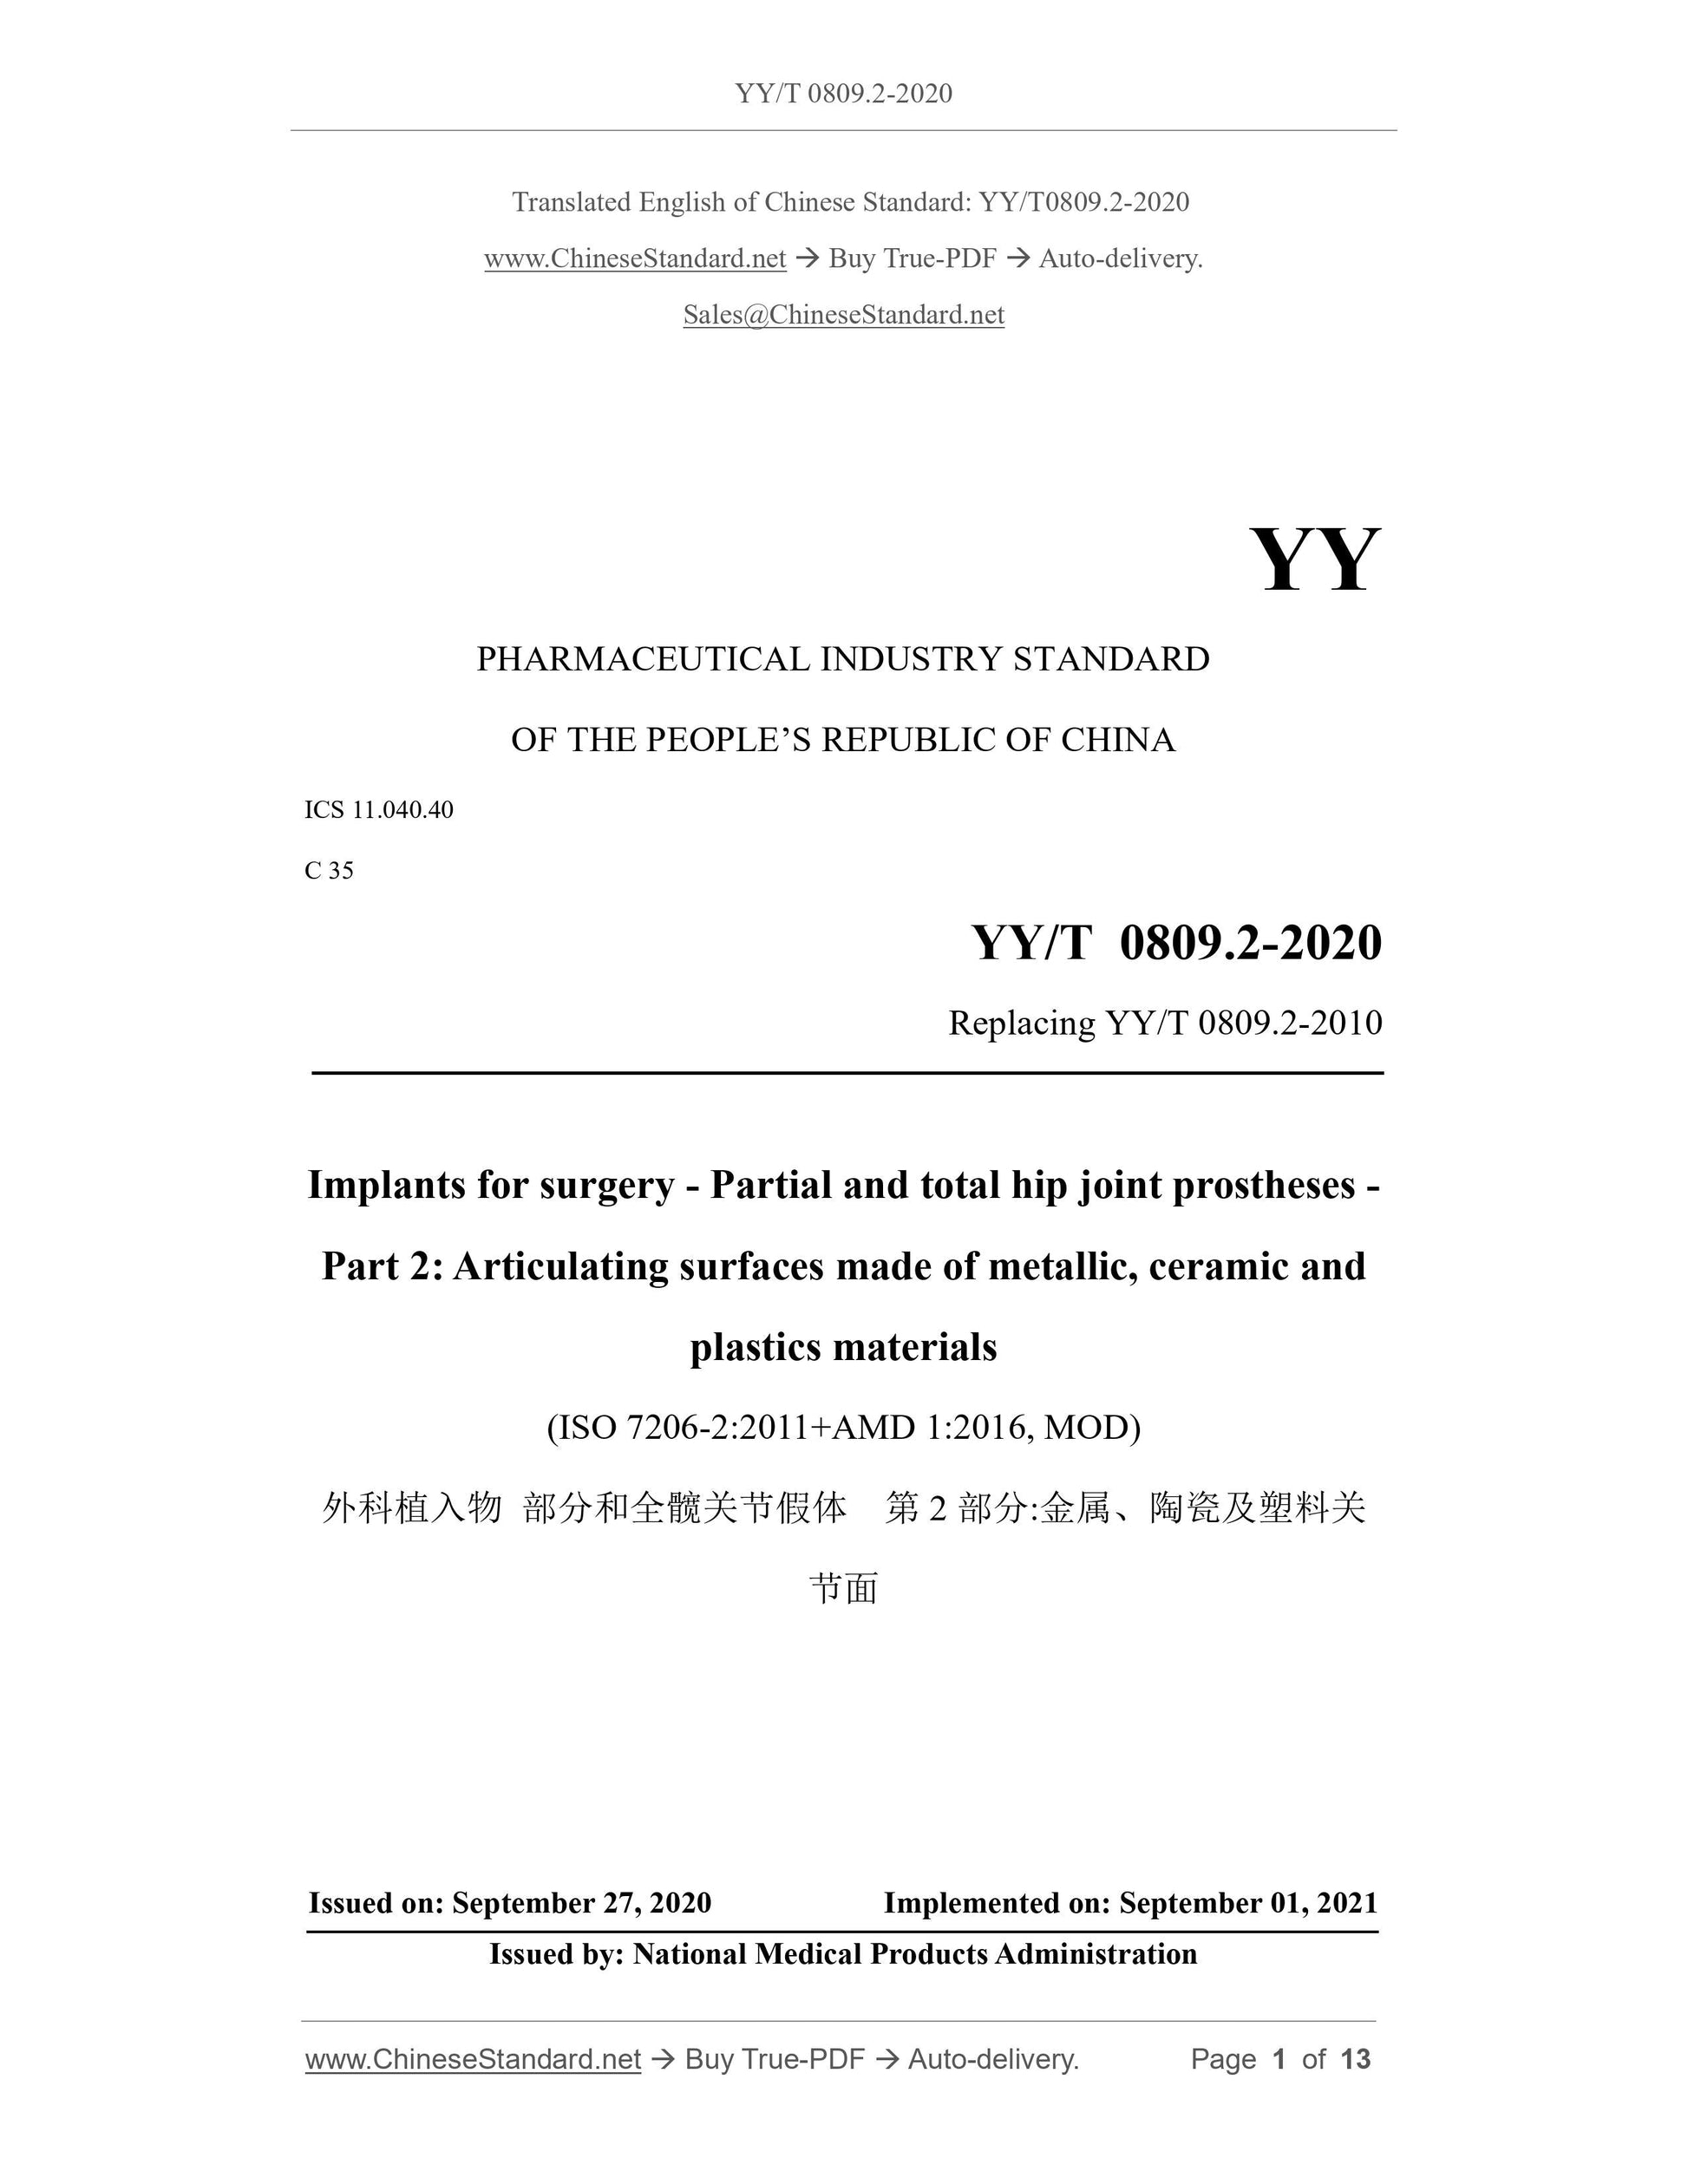 YY/T 0809.2-2020 Page 1